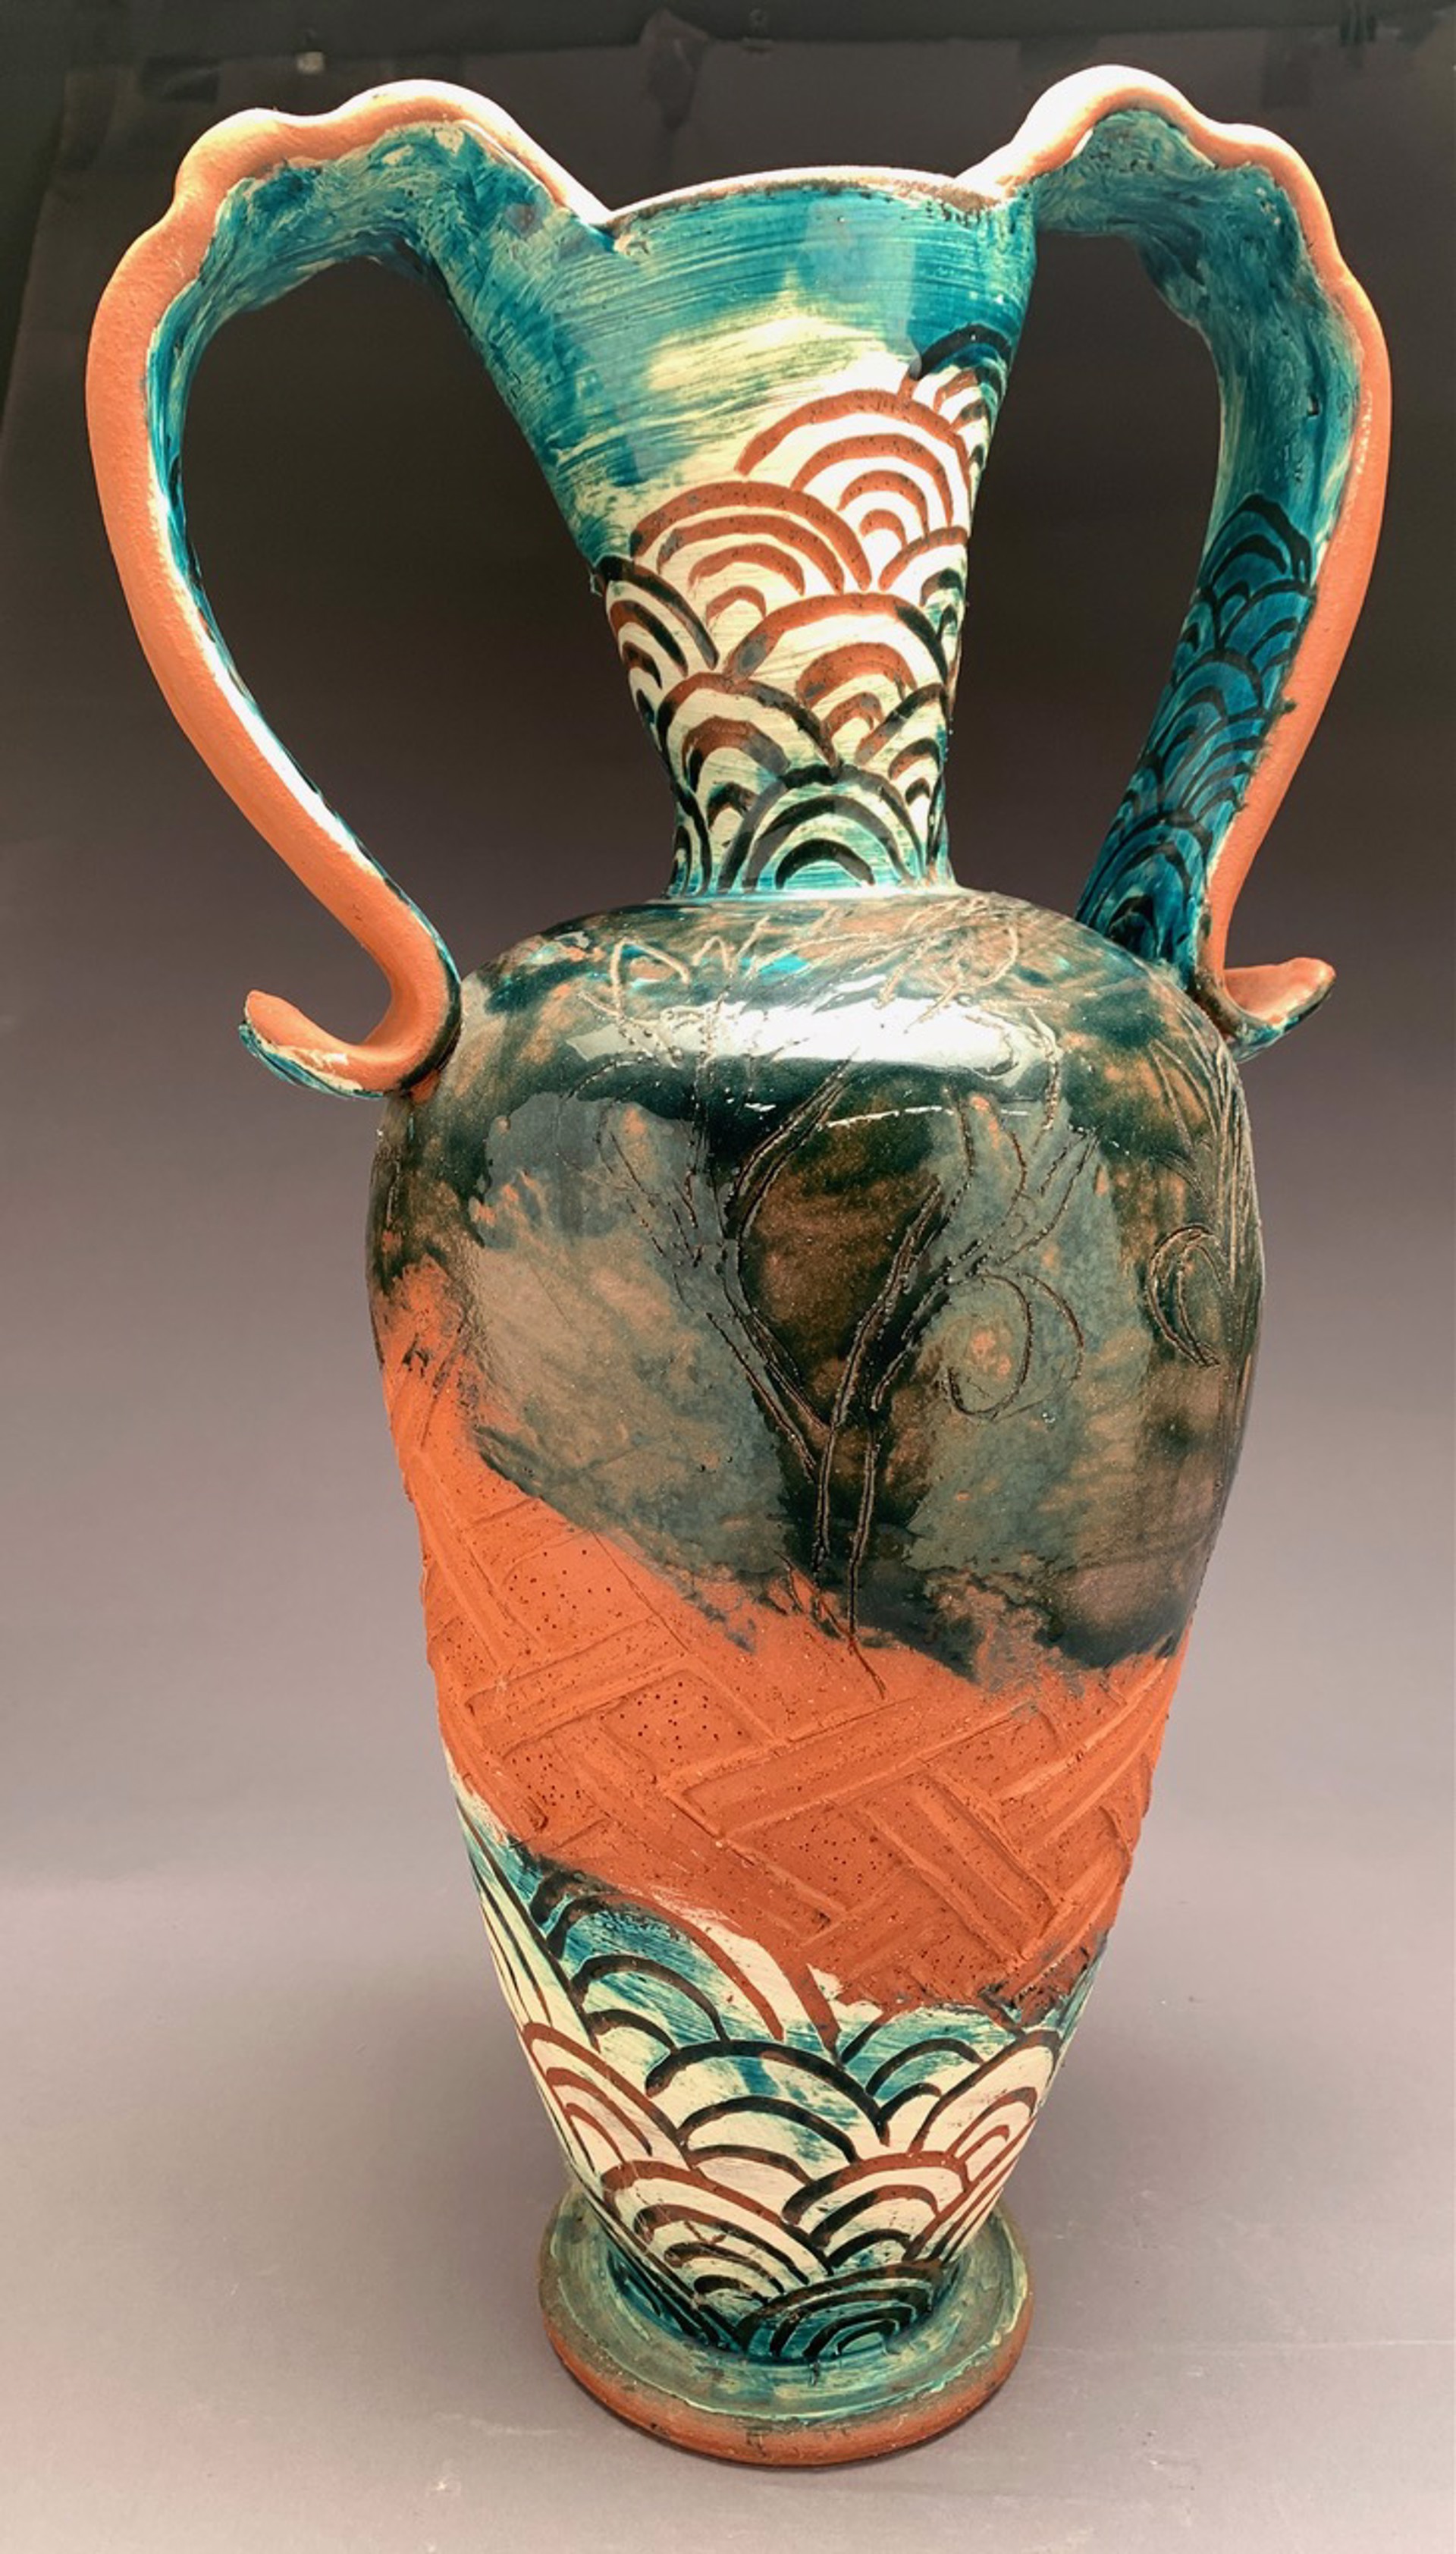 Neo-Oribe Amphora with Hosta Flowers, Lattice, and Envelope Security by Susan McGilvrey